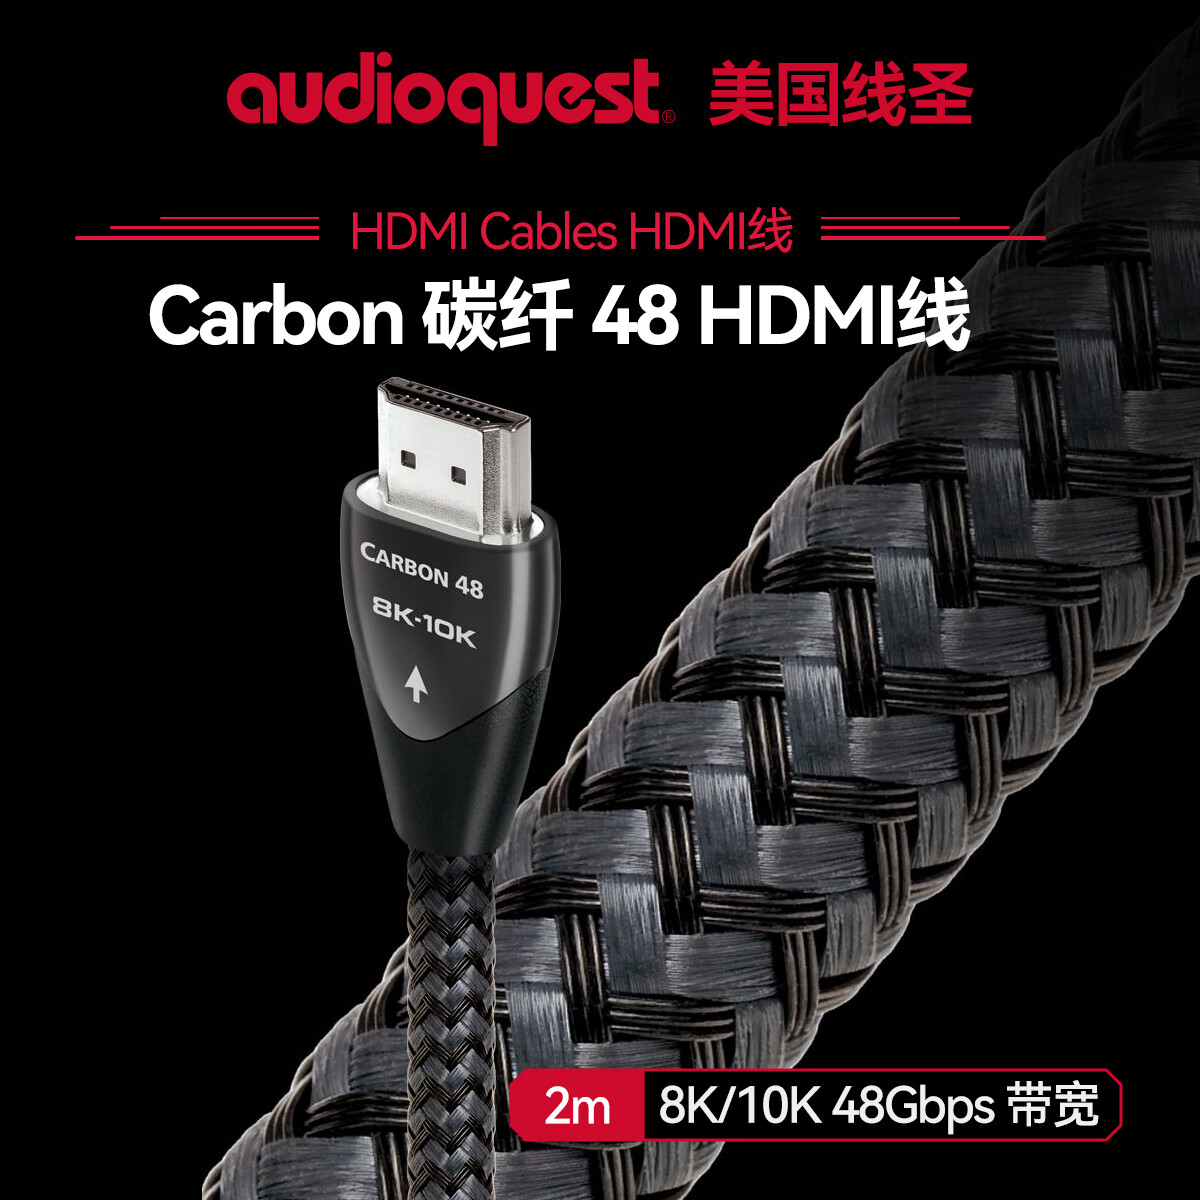 AudioQuest美国线圣Carbon碳纤48 HDMI高清线笔记本电脑机顶盒连接电视投影仪工程线8K/10K48Gbps带宽2m